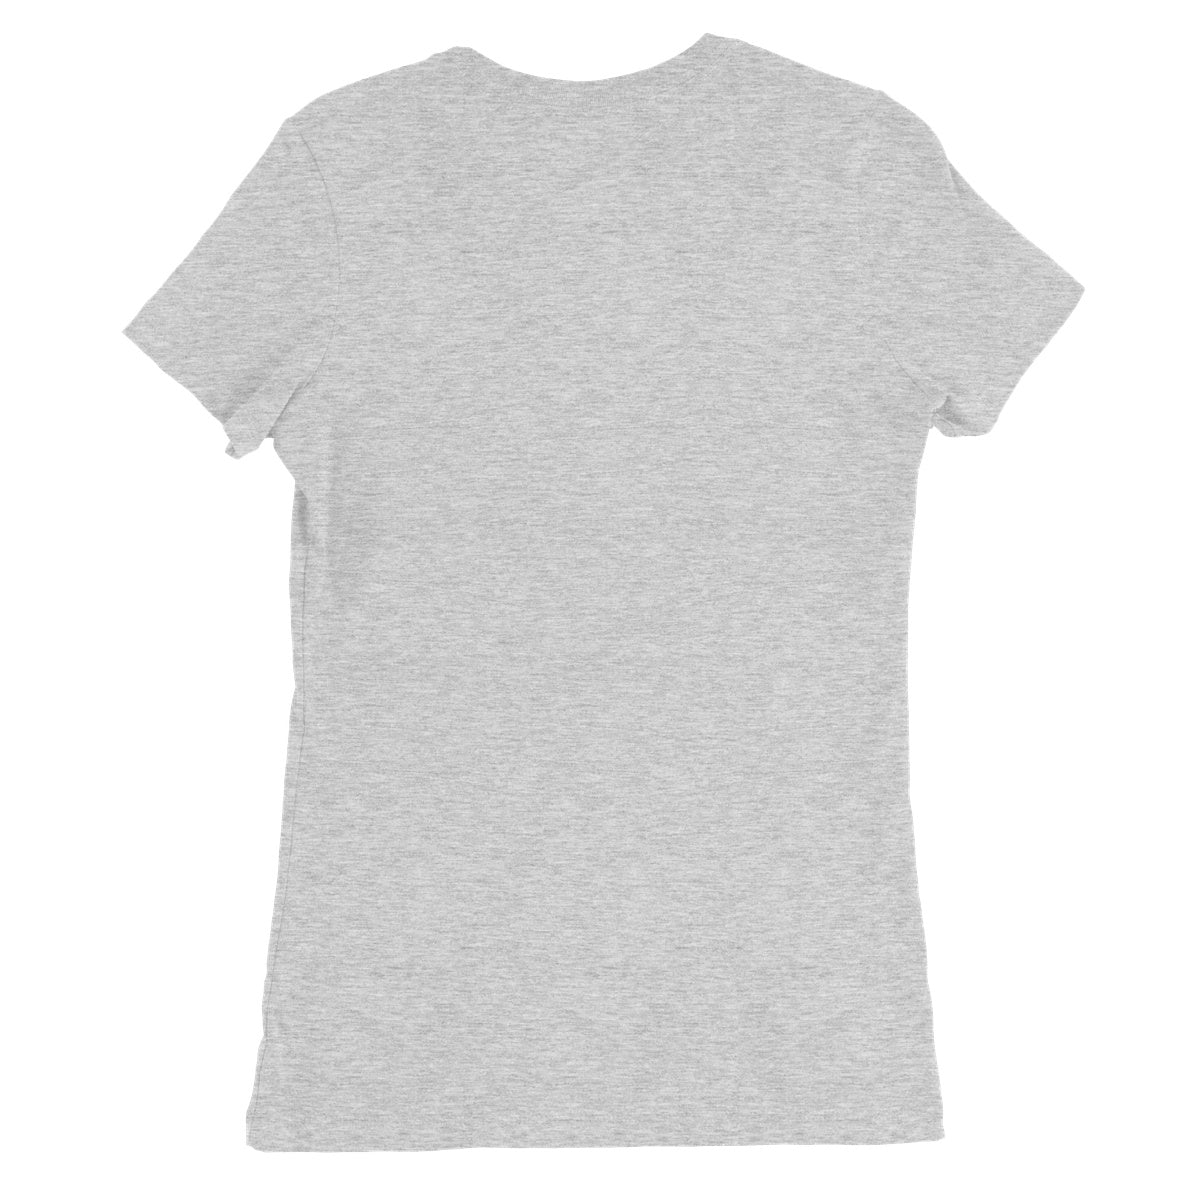 Complex Squaring Women's Favourite T-Shirt